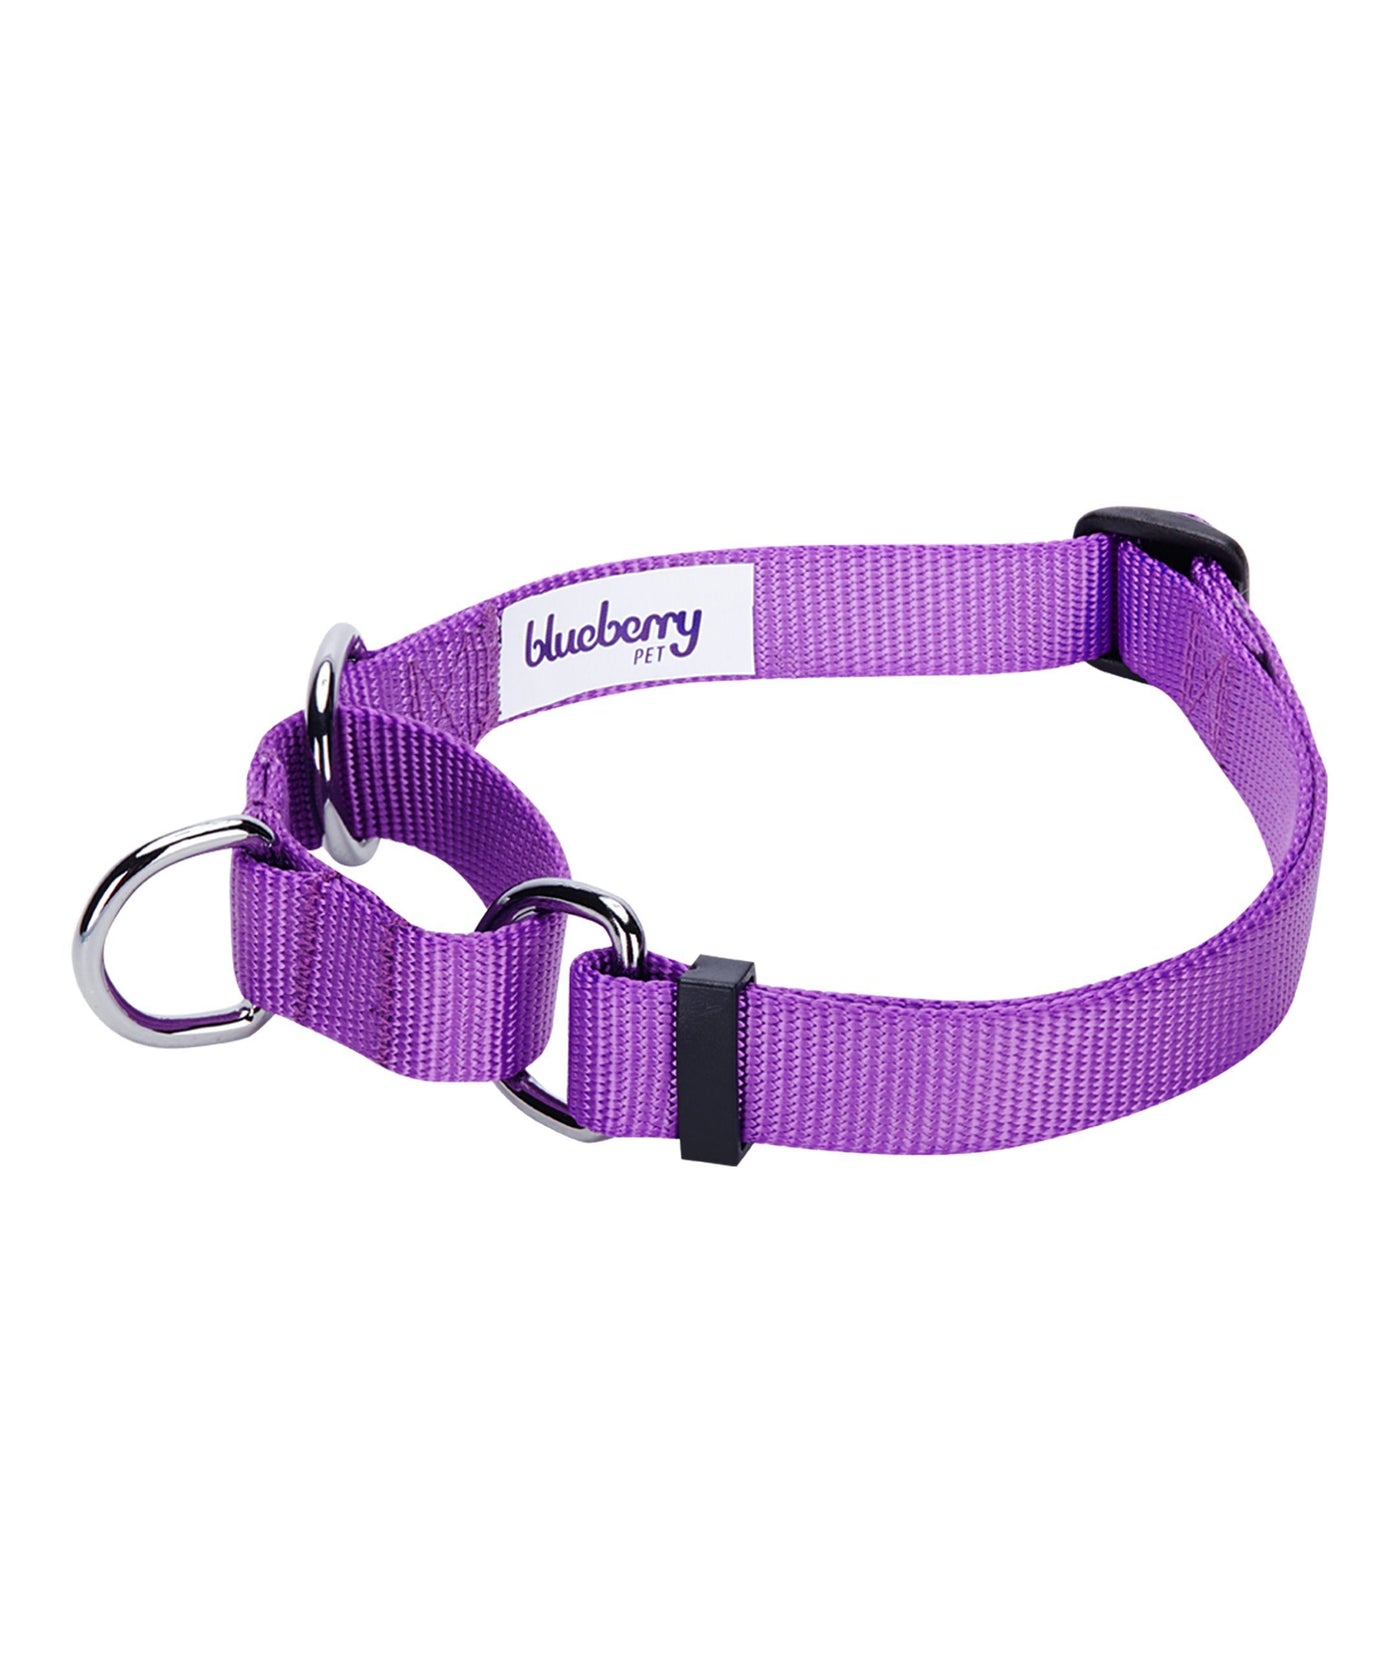 Blueberry Pet Martingale Dog Collar Collar Blueberry Pet Purple S 